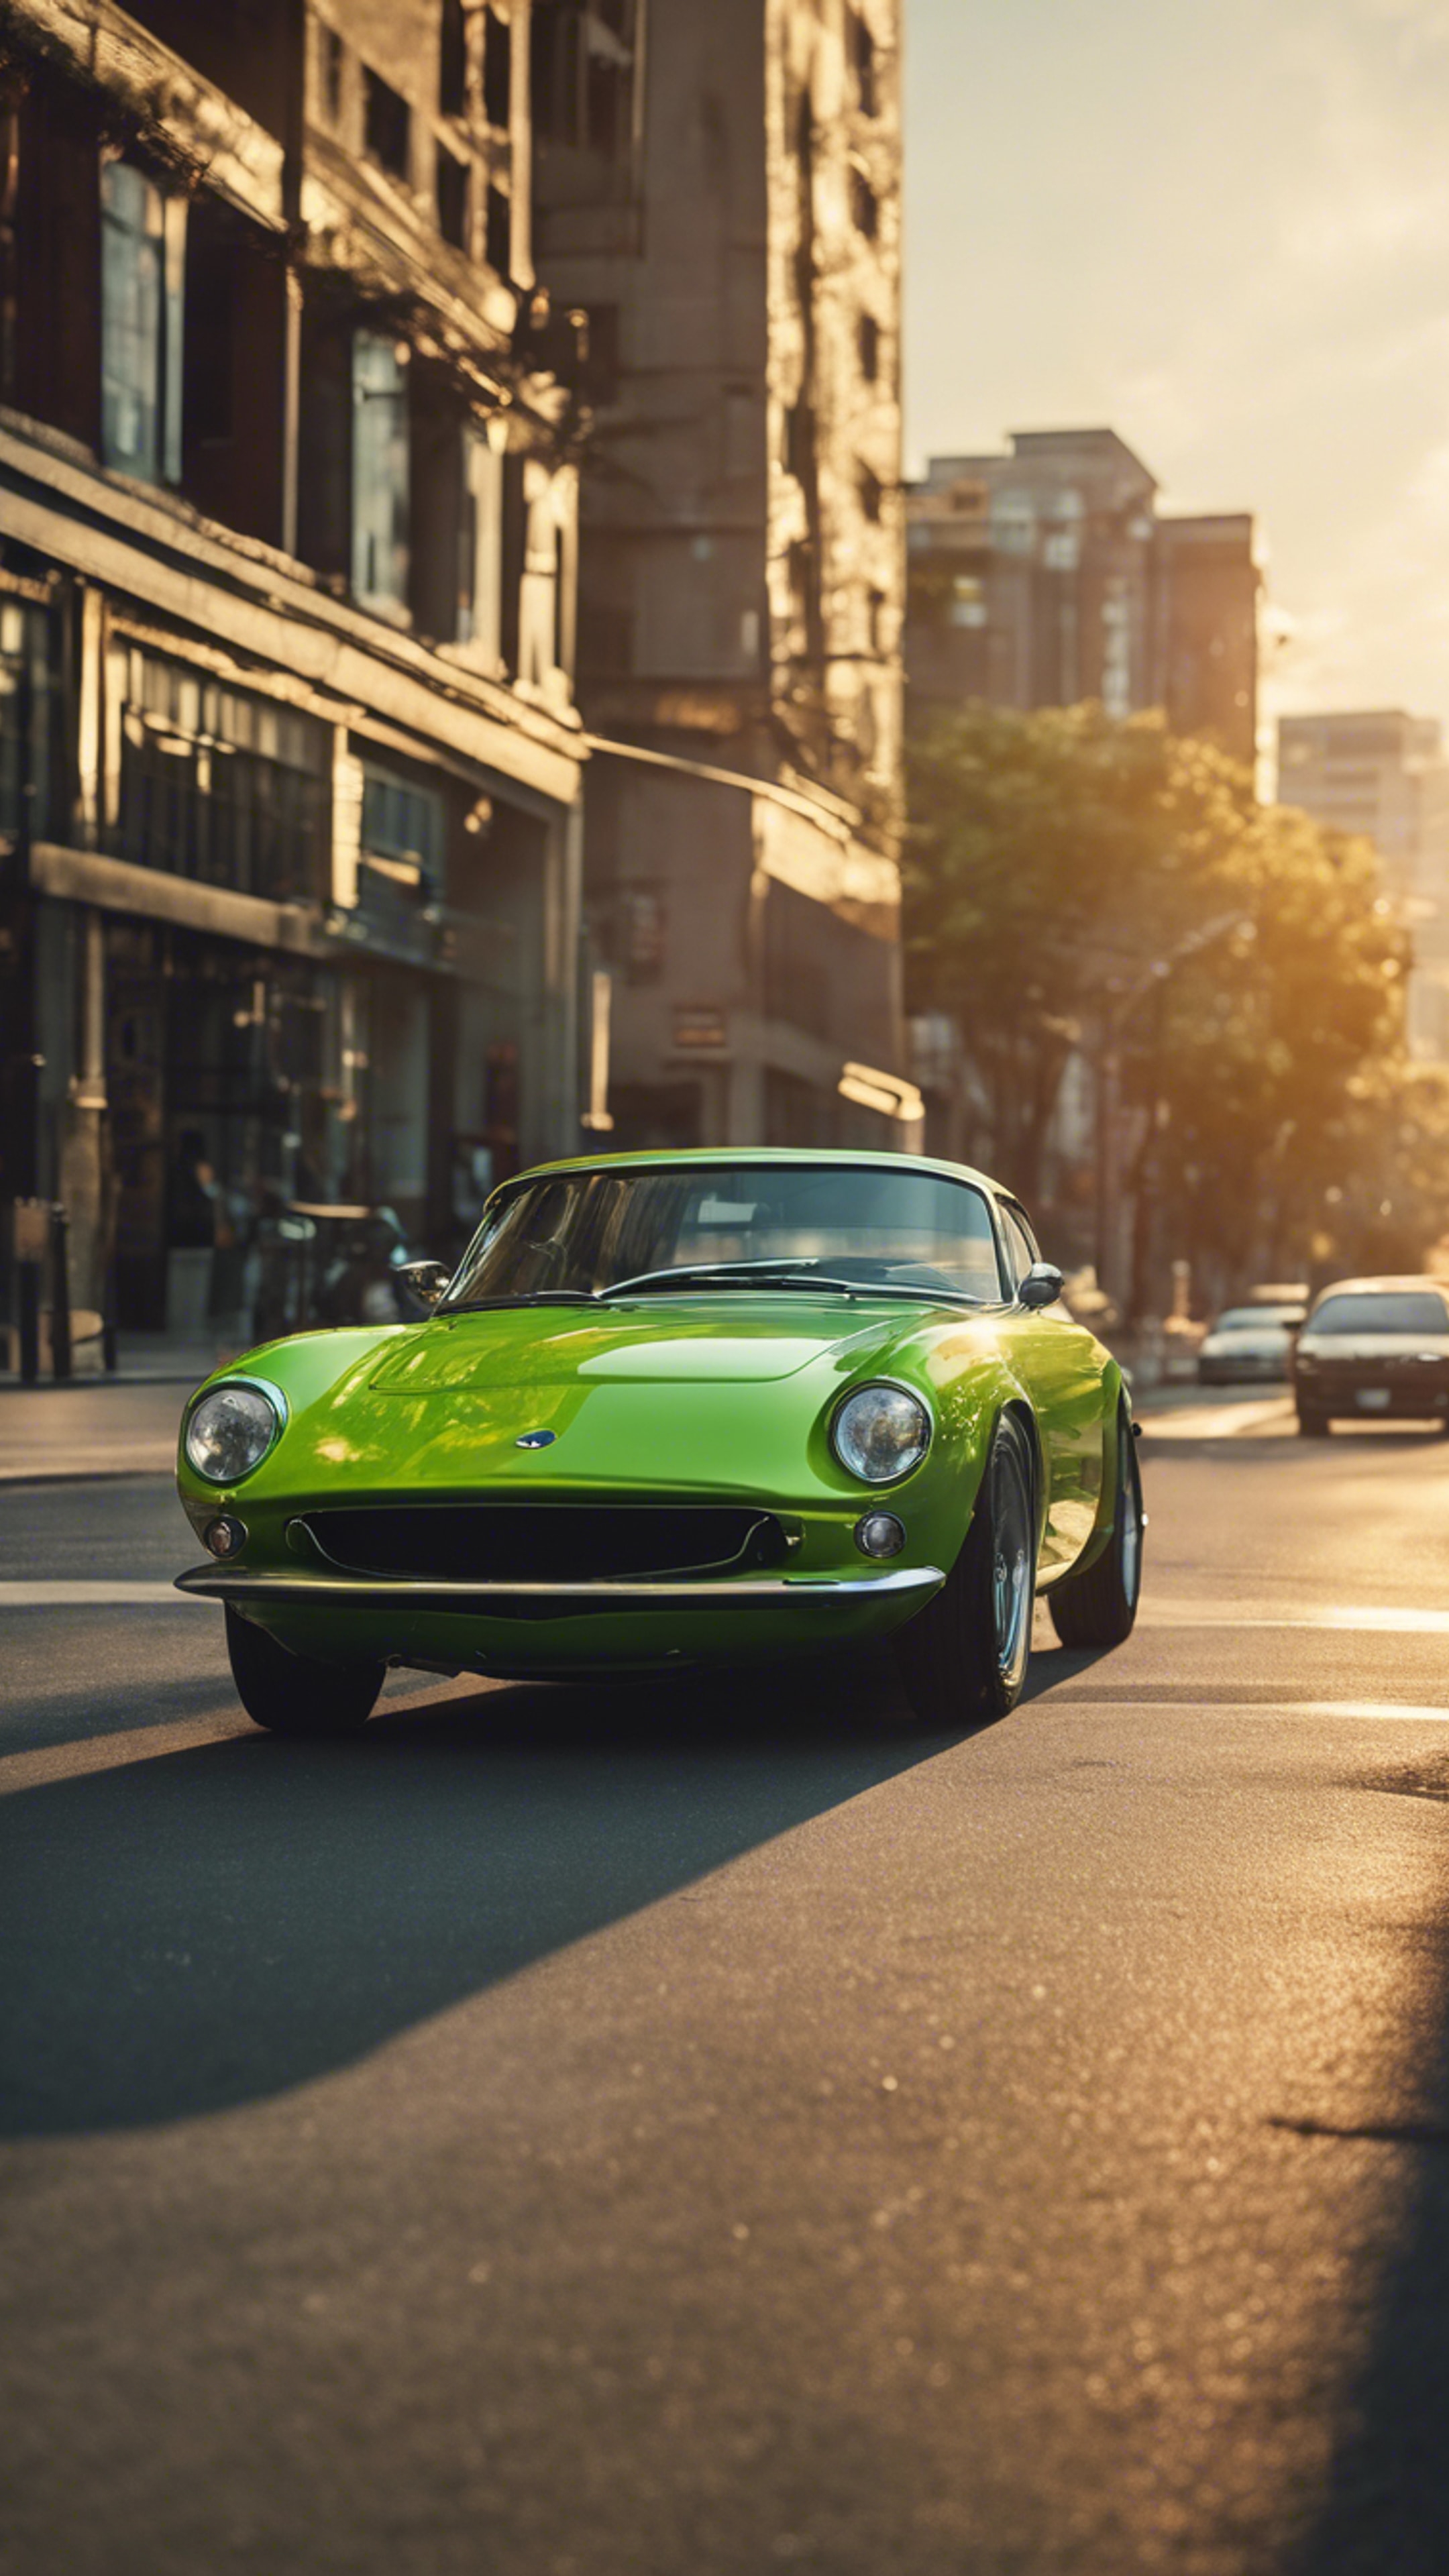 A lime green sports car speeding down a city street at sunset. Tapet[650ecab6c10046e0a1d5]